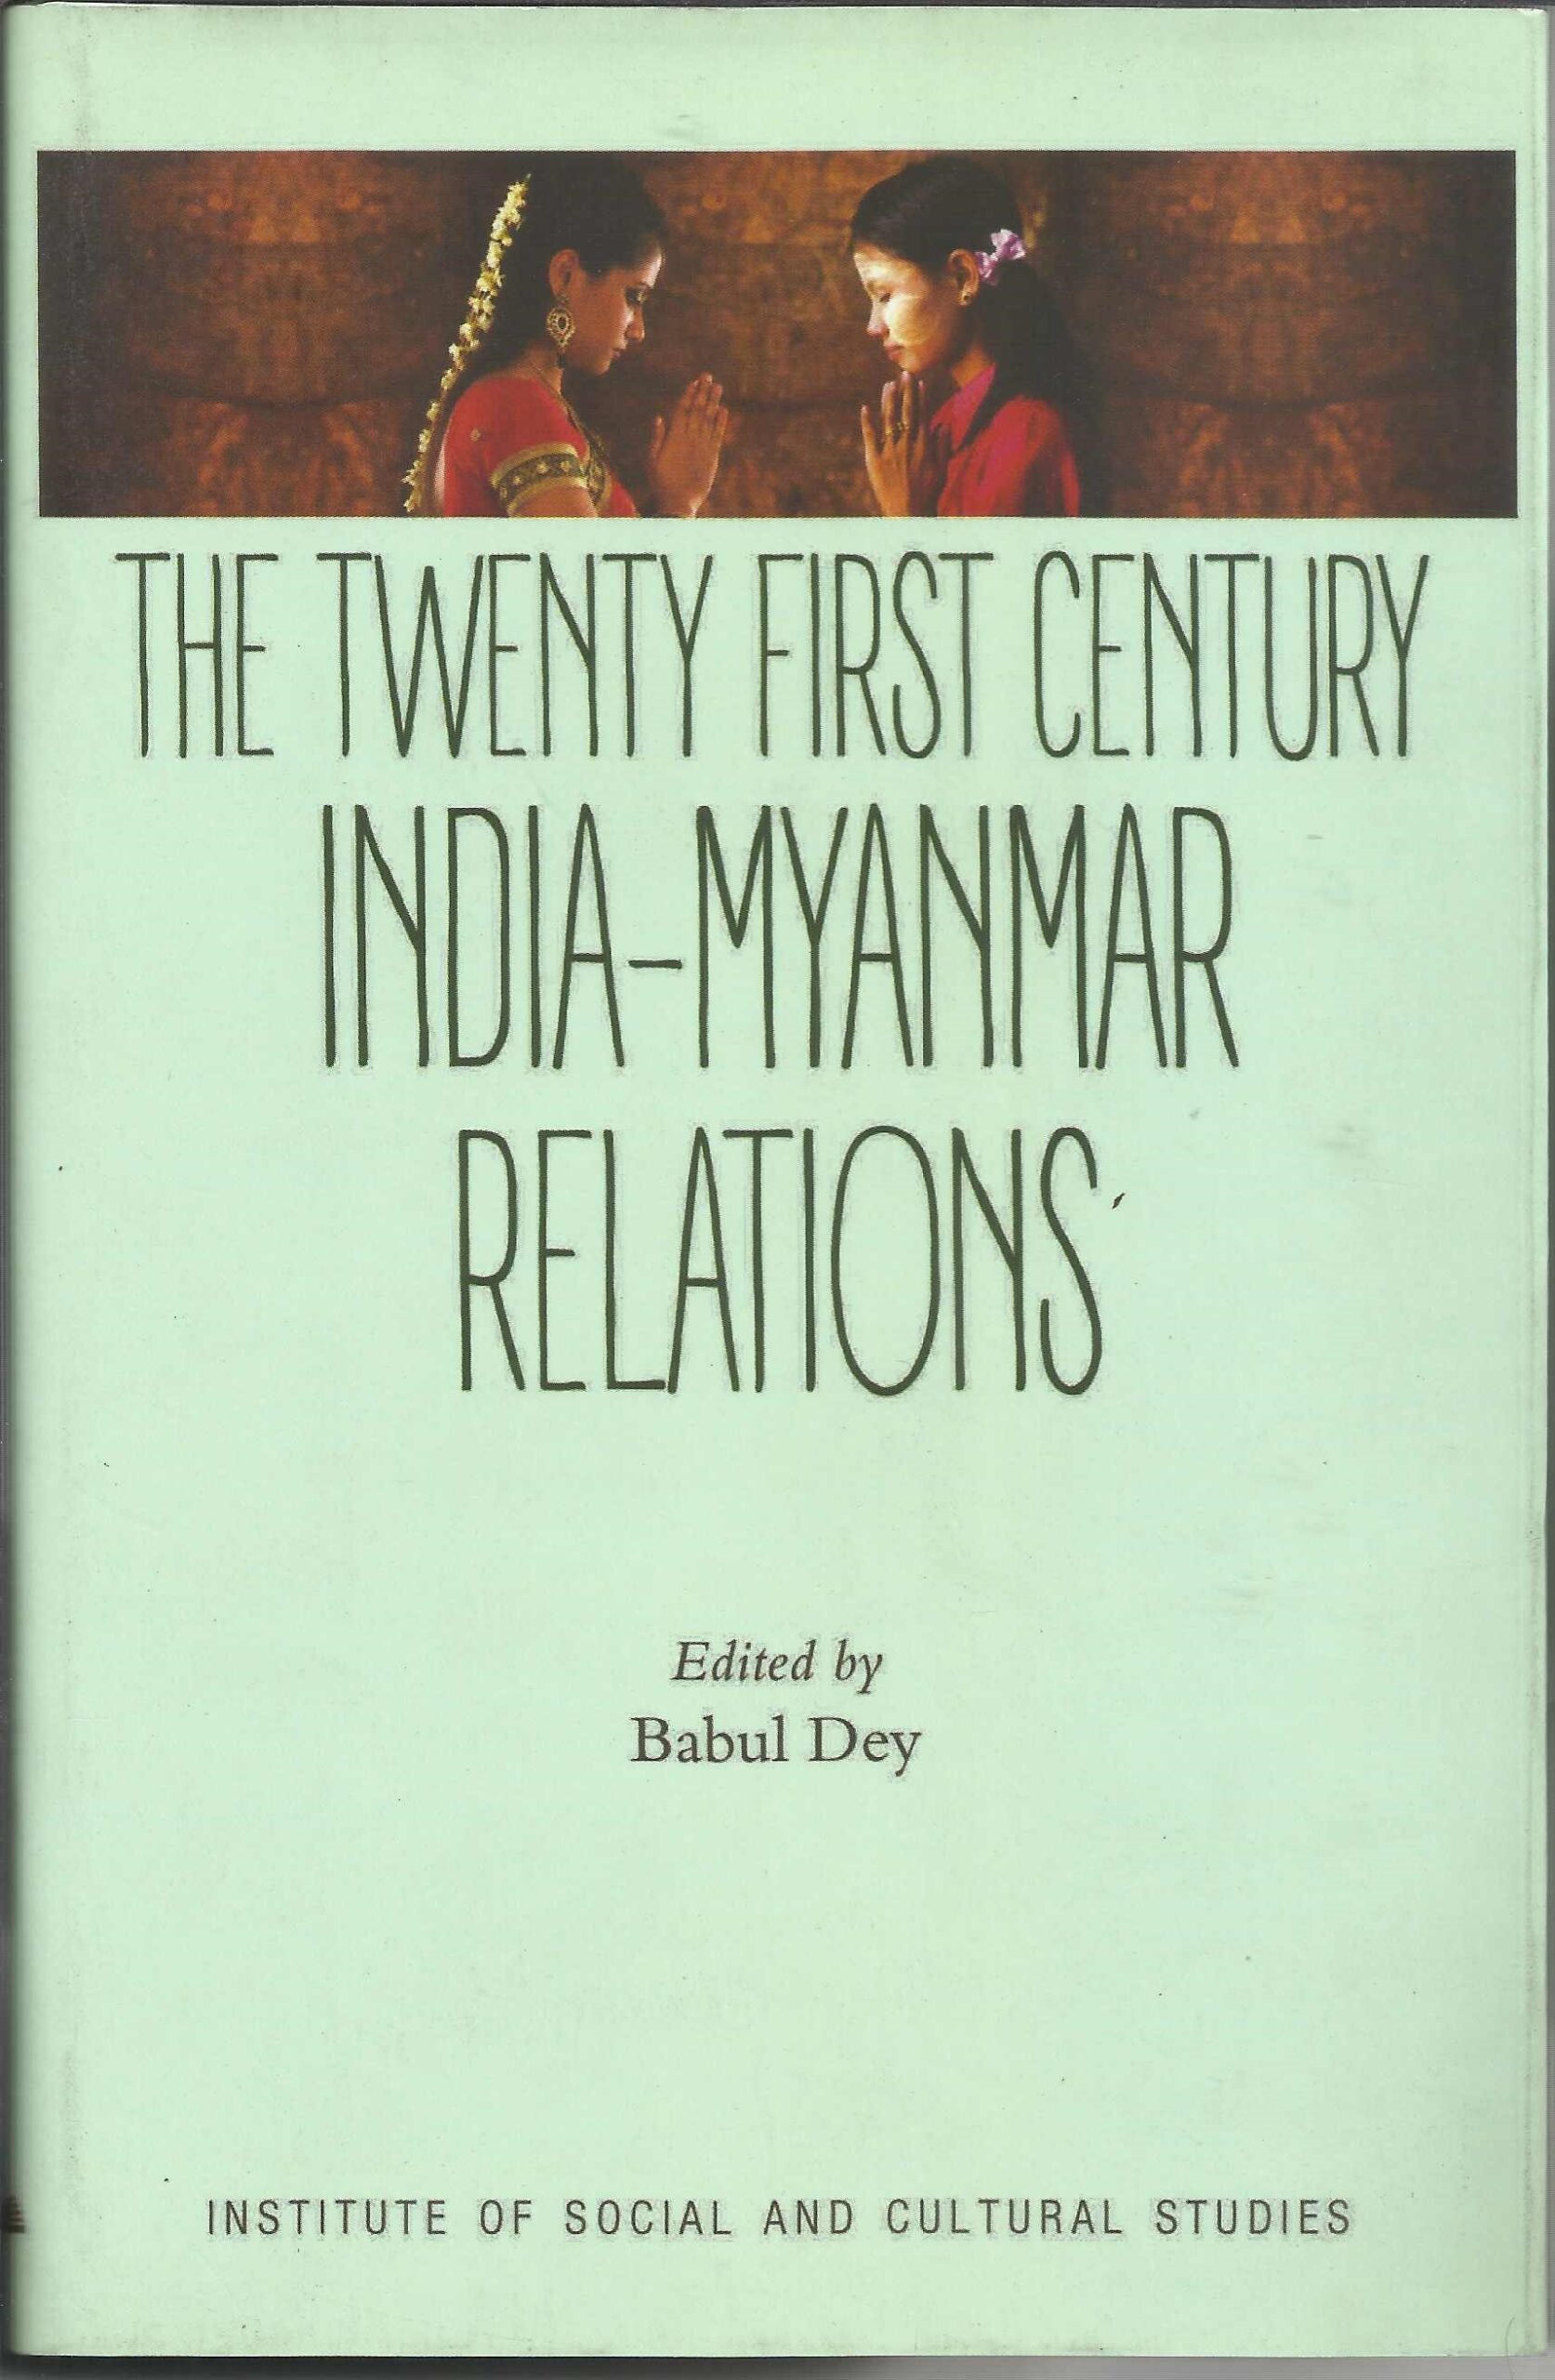 The Twenty First Century India-Myanmar Relations